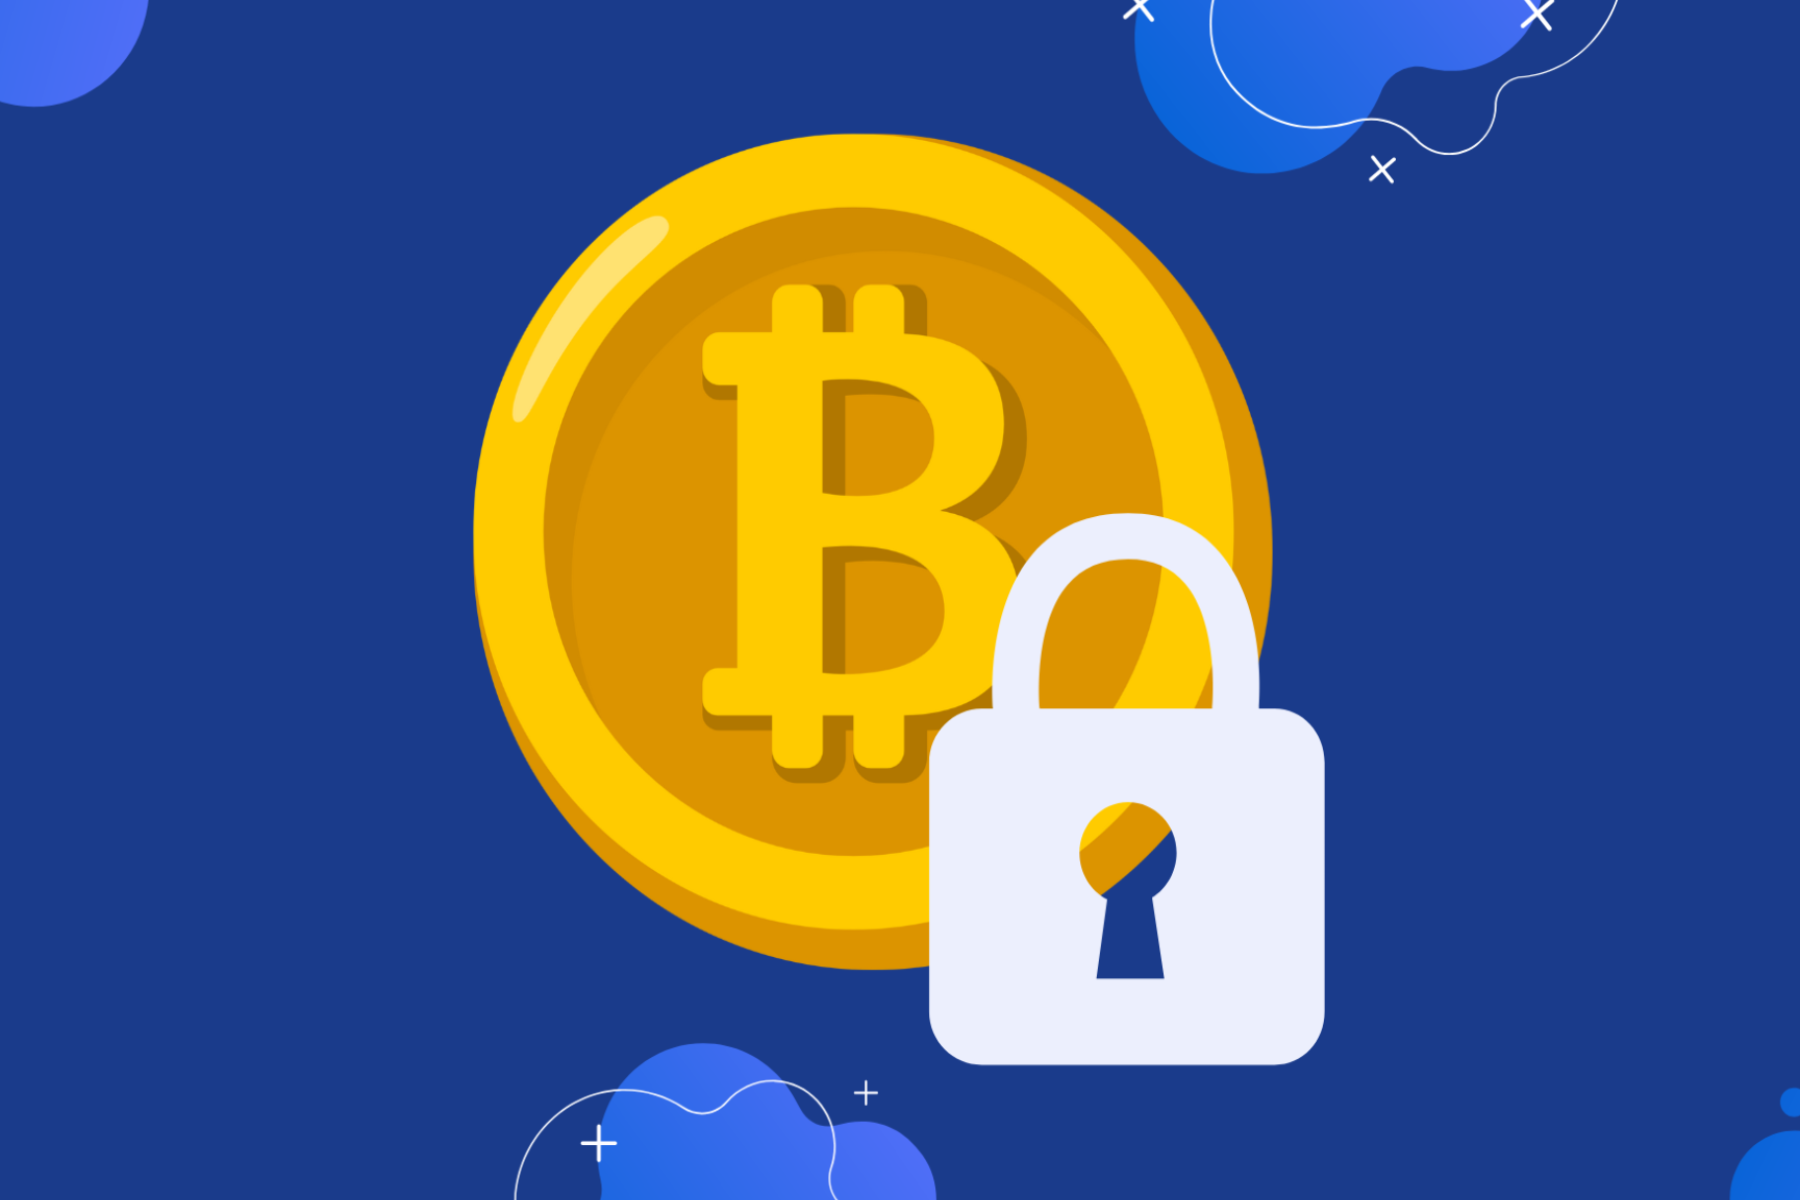 A Bitcoin alongside a padlock